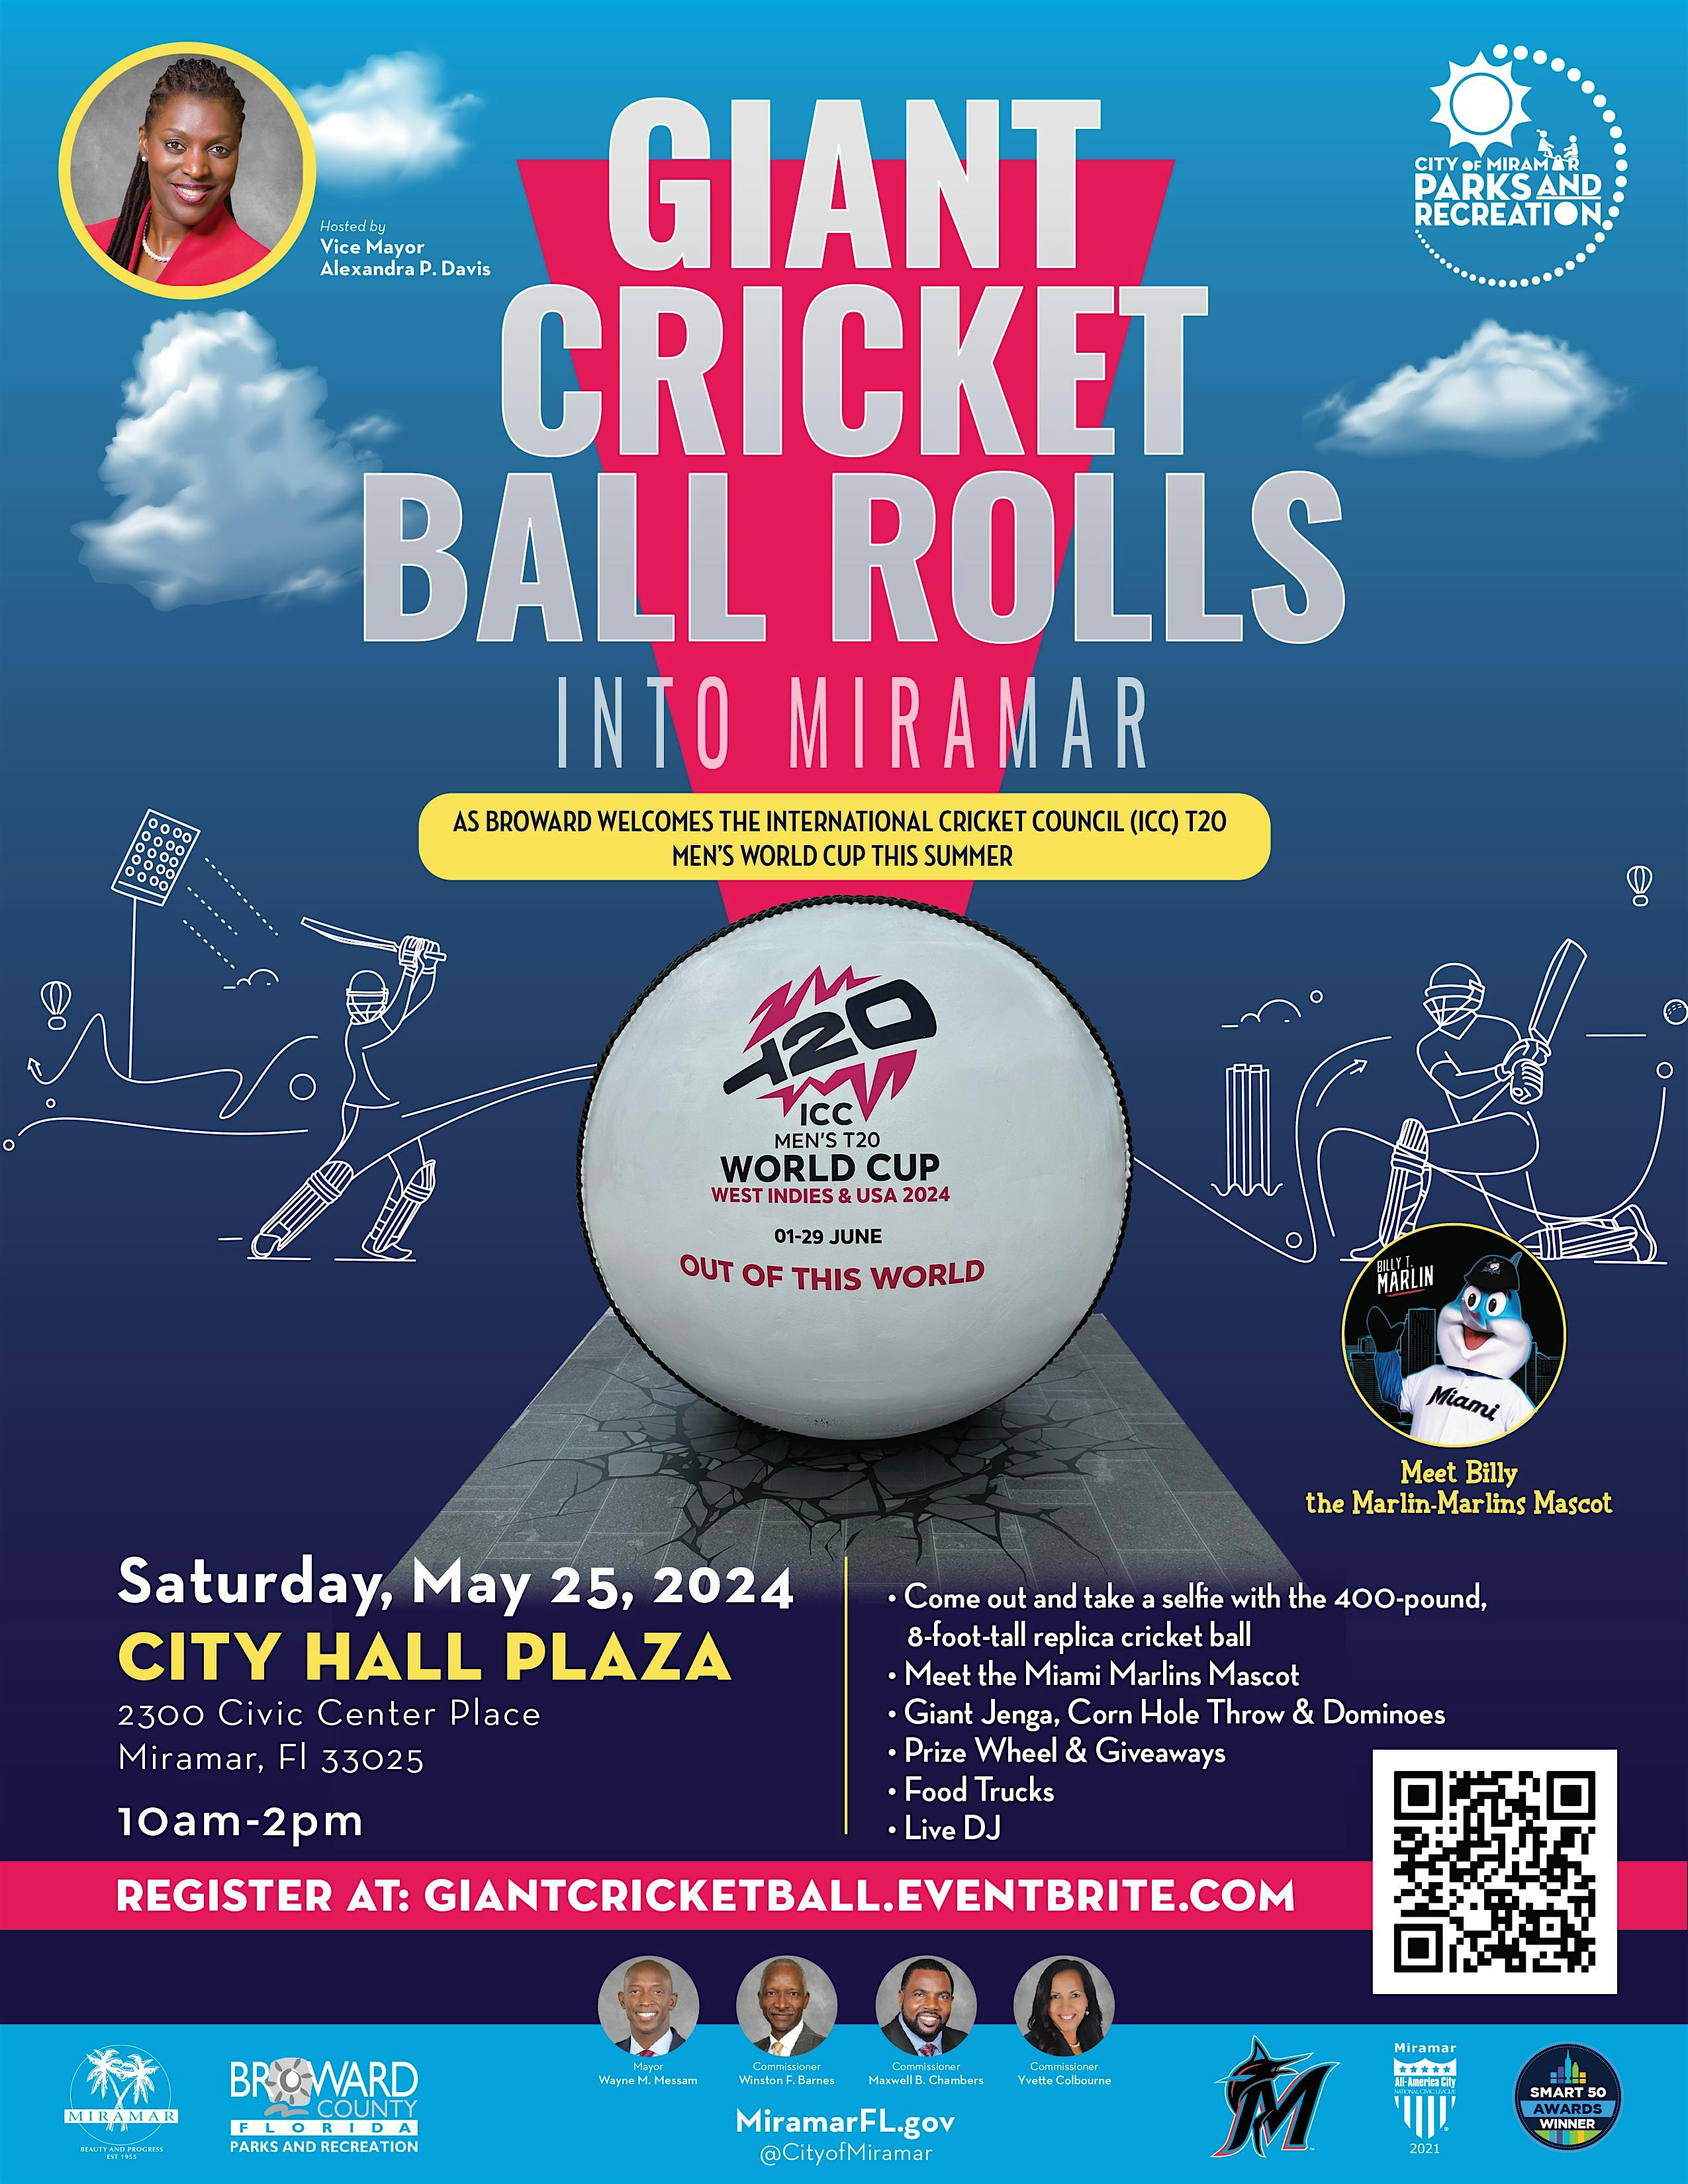 Giant Cricket Ball Rolls into Miramar